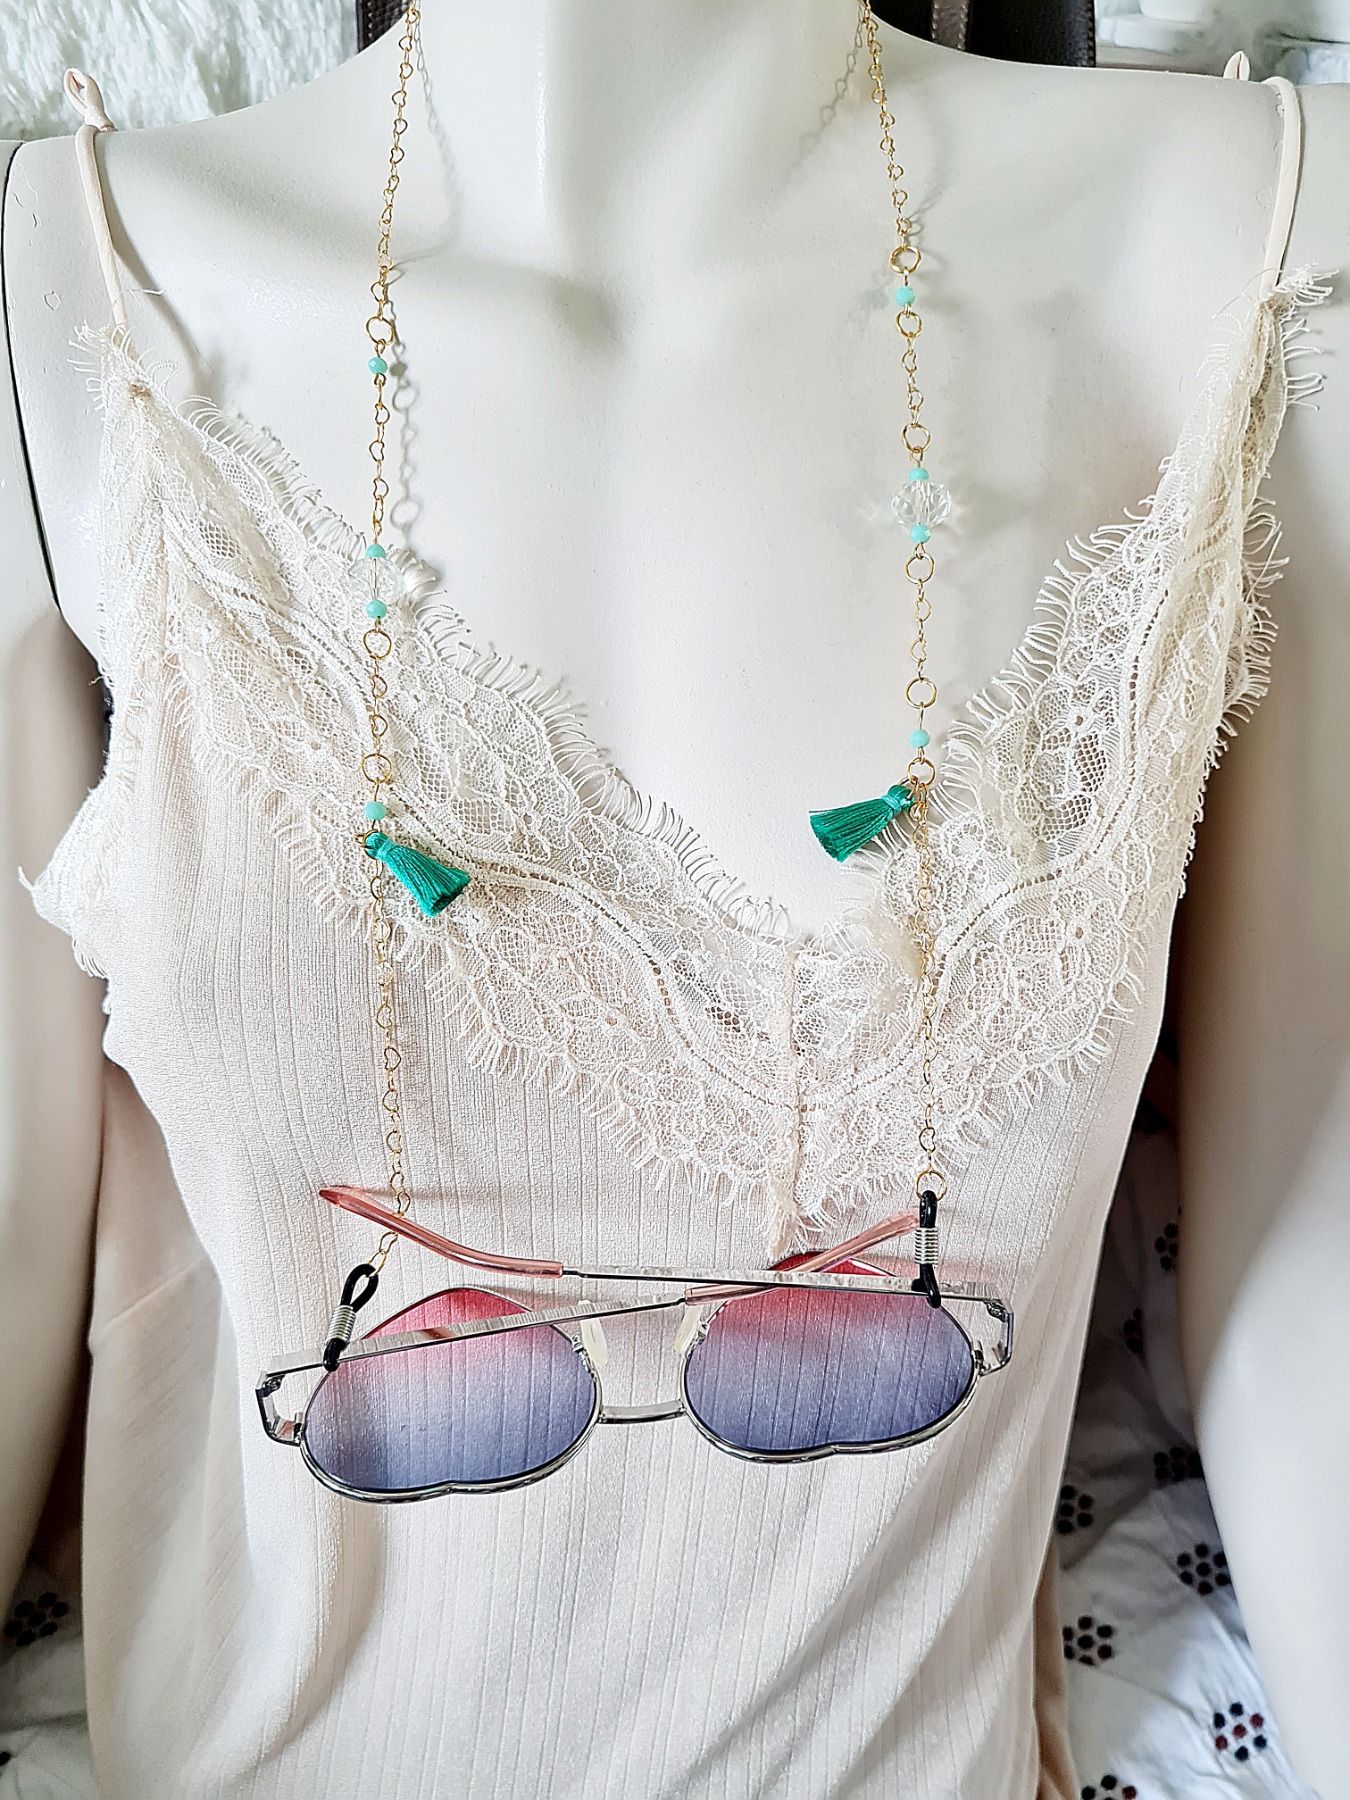 Brillenketten Quasten Muscheln Perlen Sommer-Accessoire 6